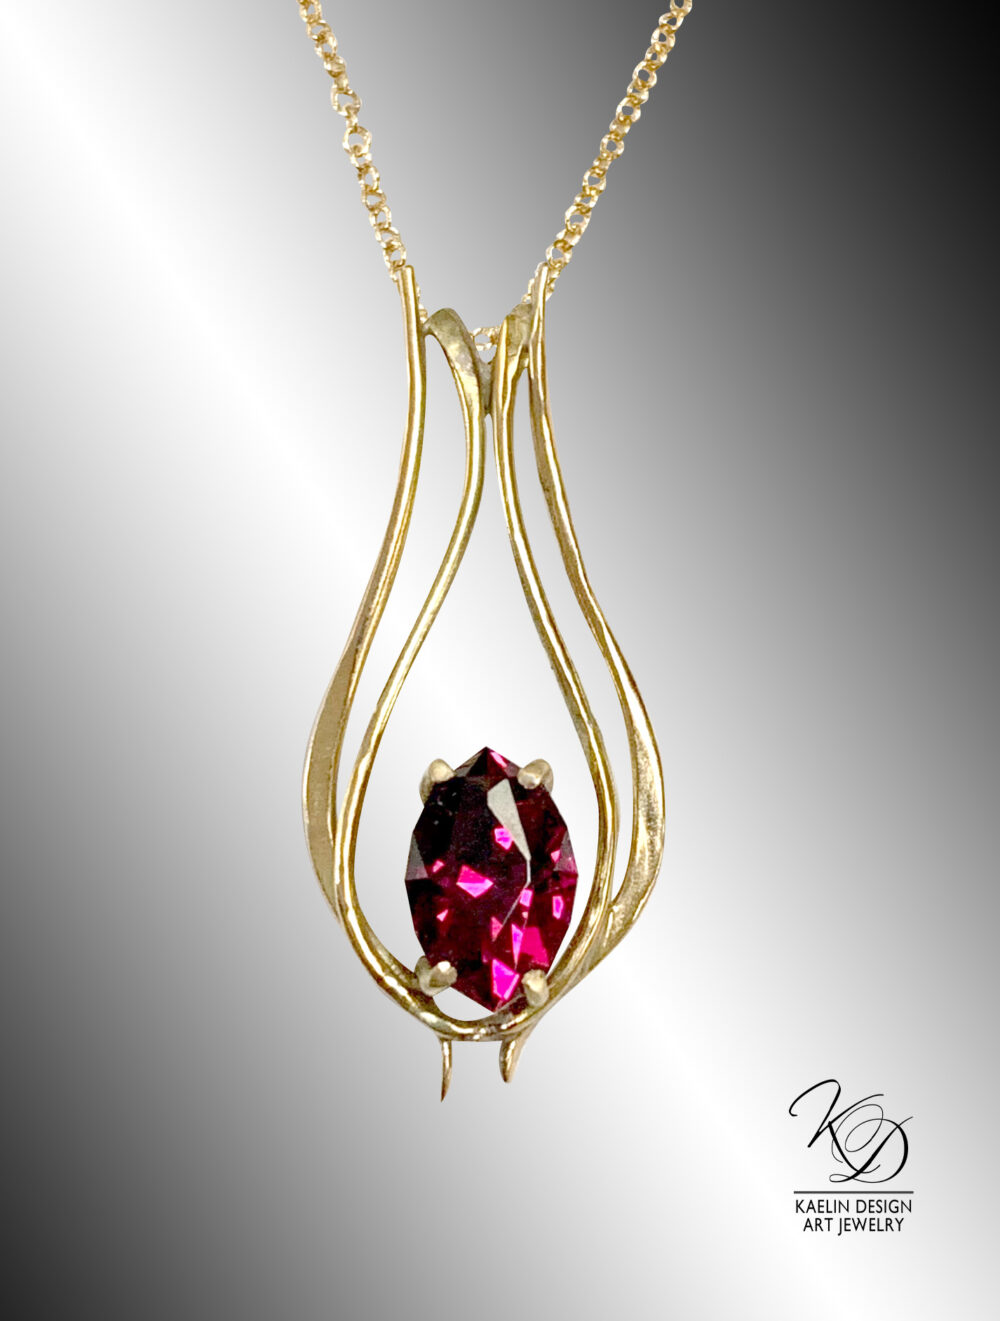 Firelight Gold Art Pendant with Rhodolite Garnet by Kaelin Design Fine Art Jewelry